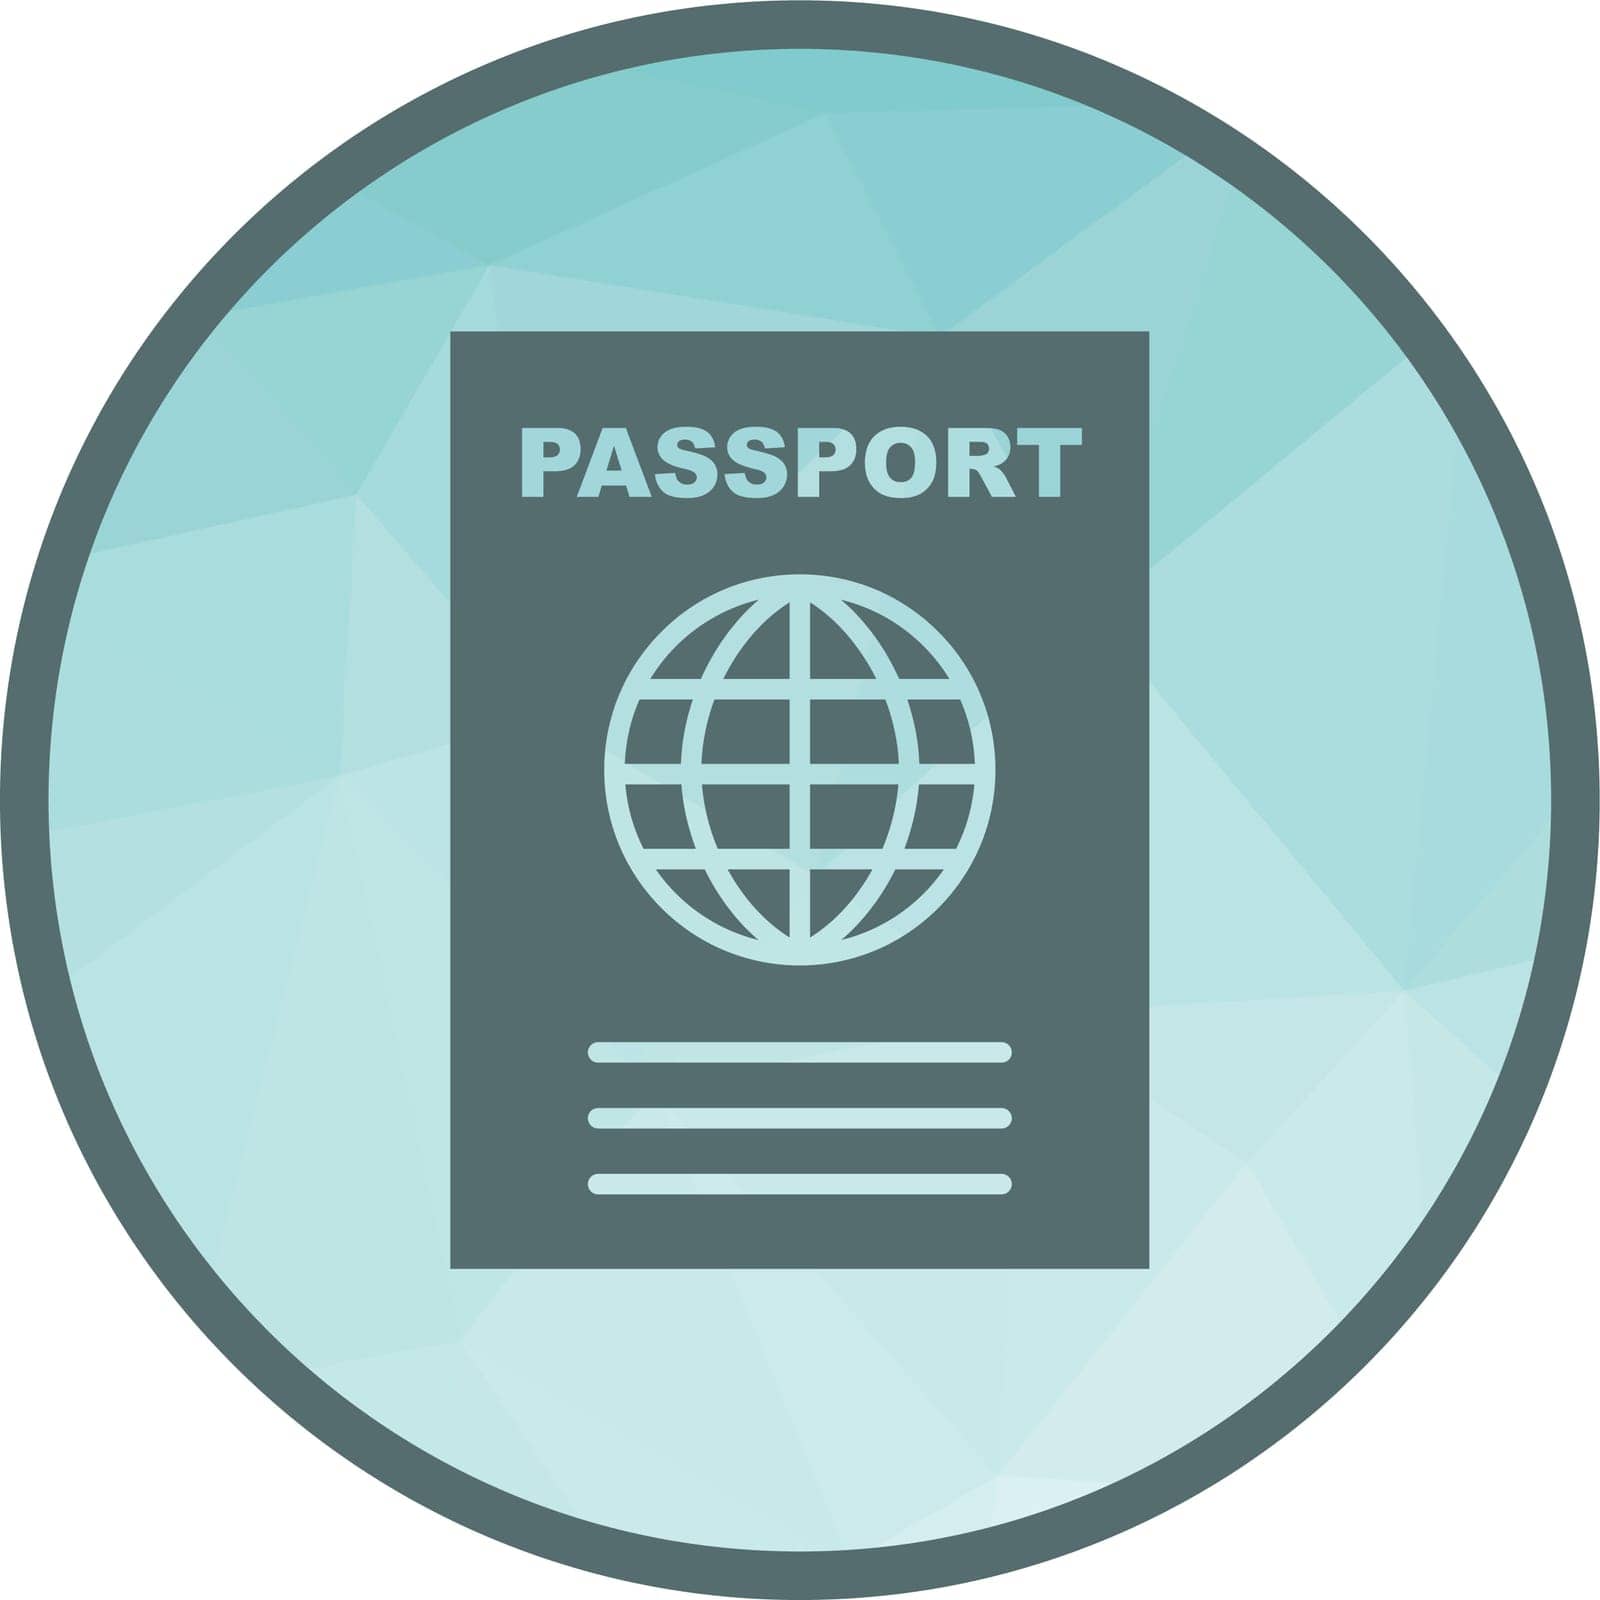 Passport icon vector image. by ICONBUNNY